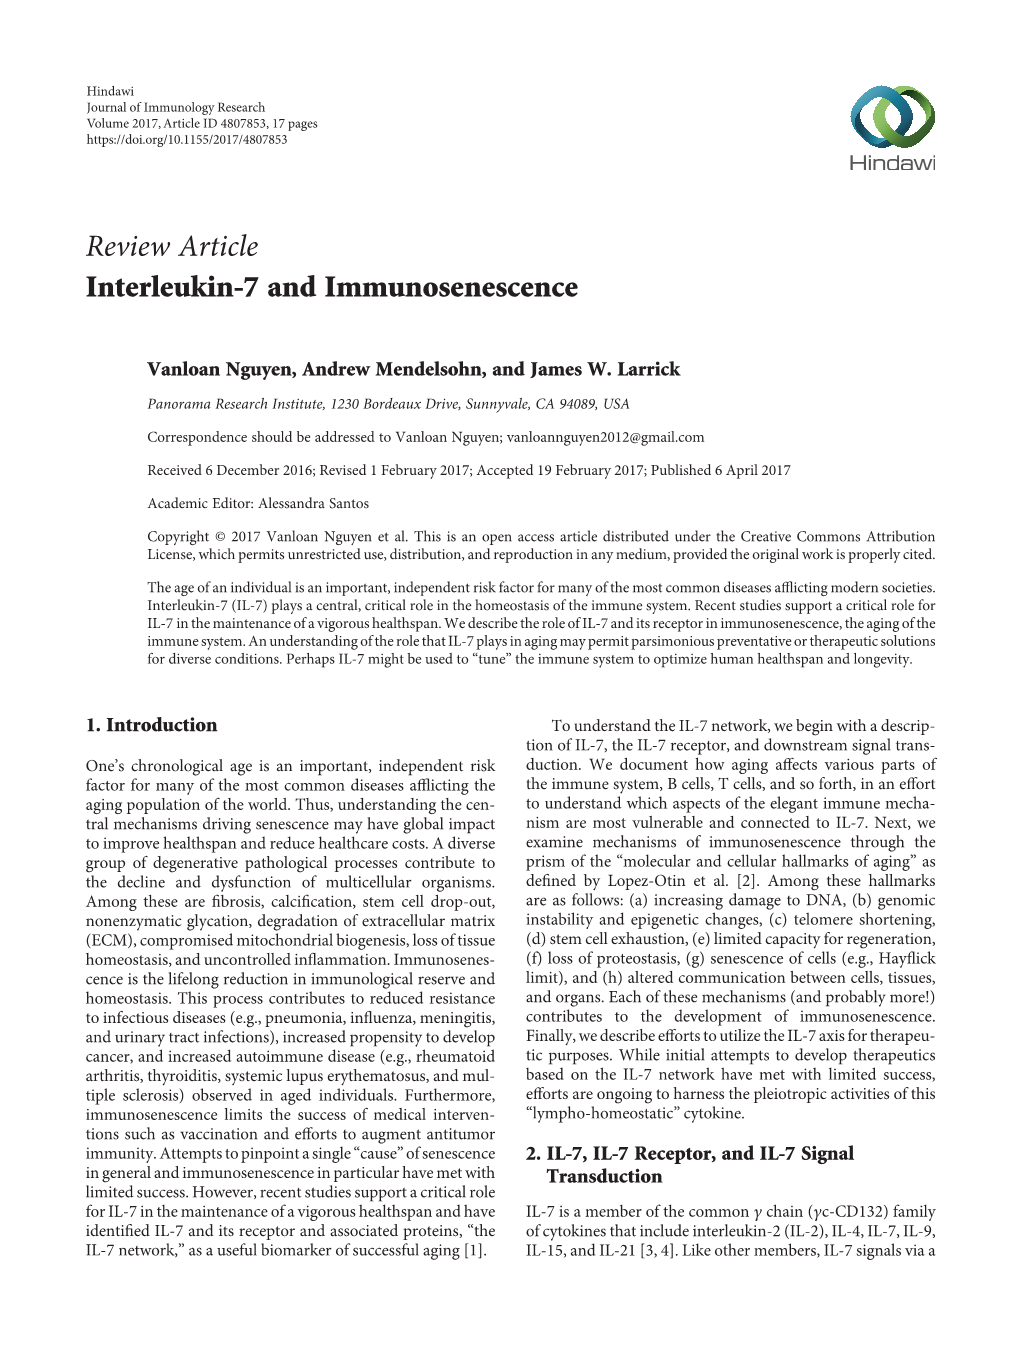 Interleukin-7 and Immunosenescence